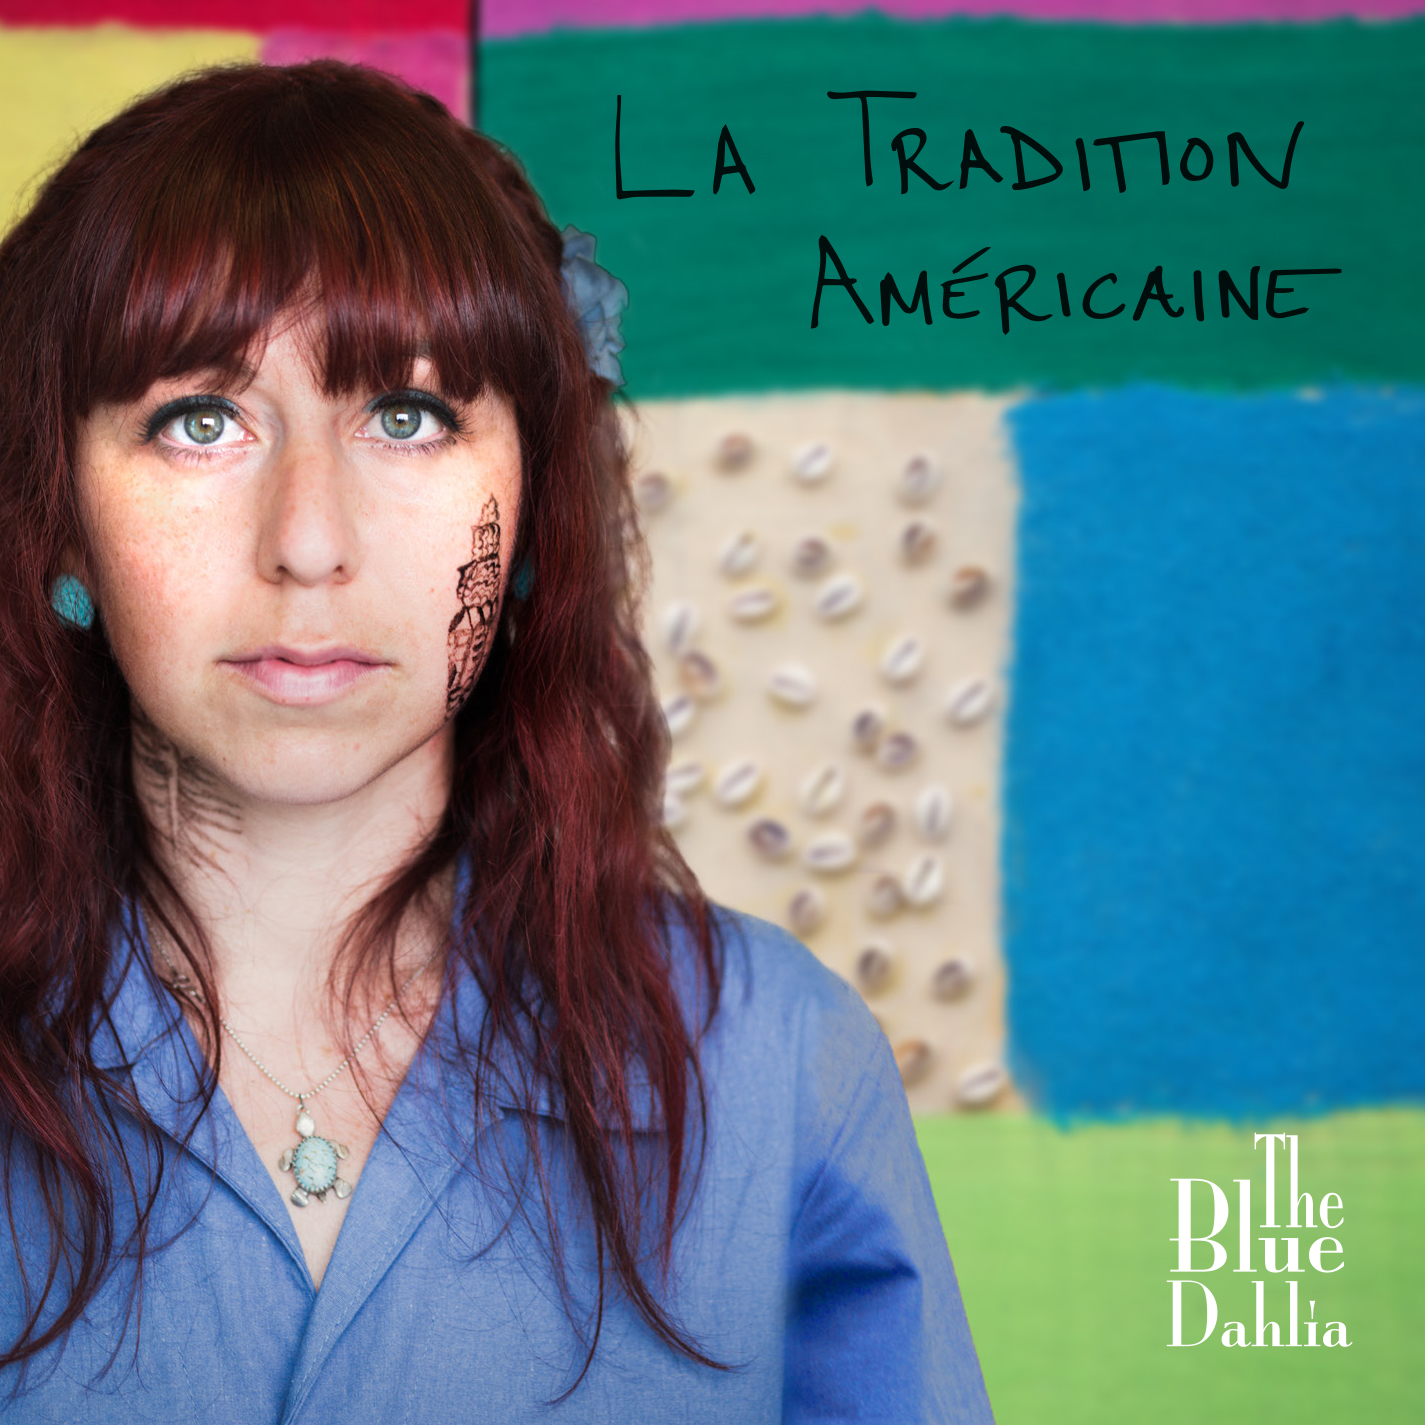 New Release by The Blue Dahlia, “La Tradition Américaine”